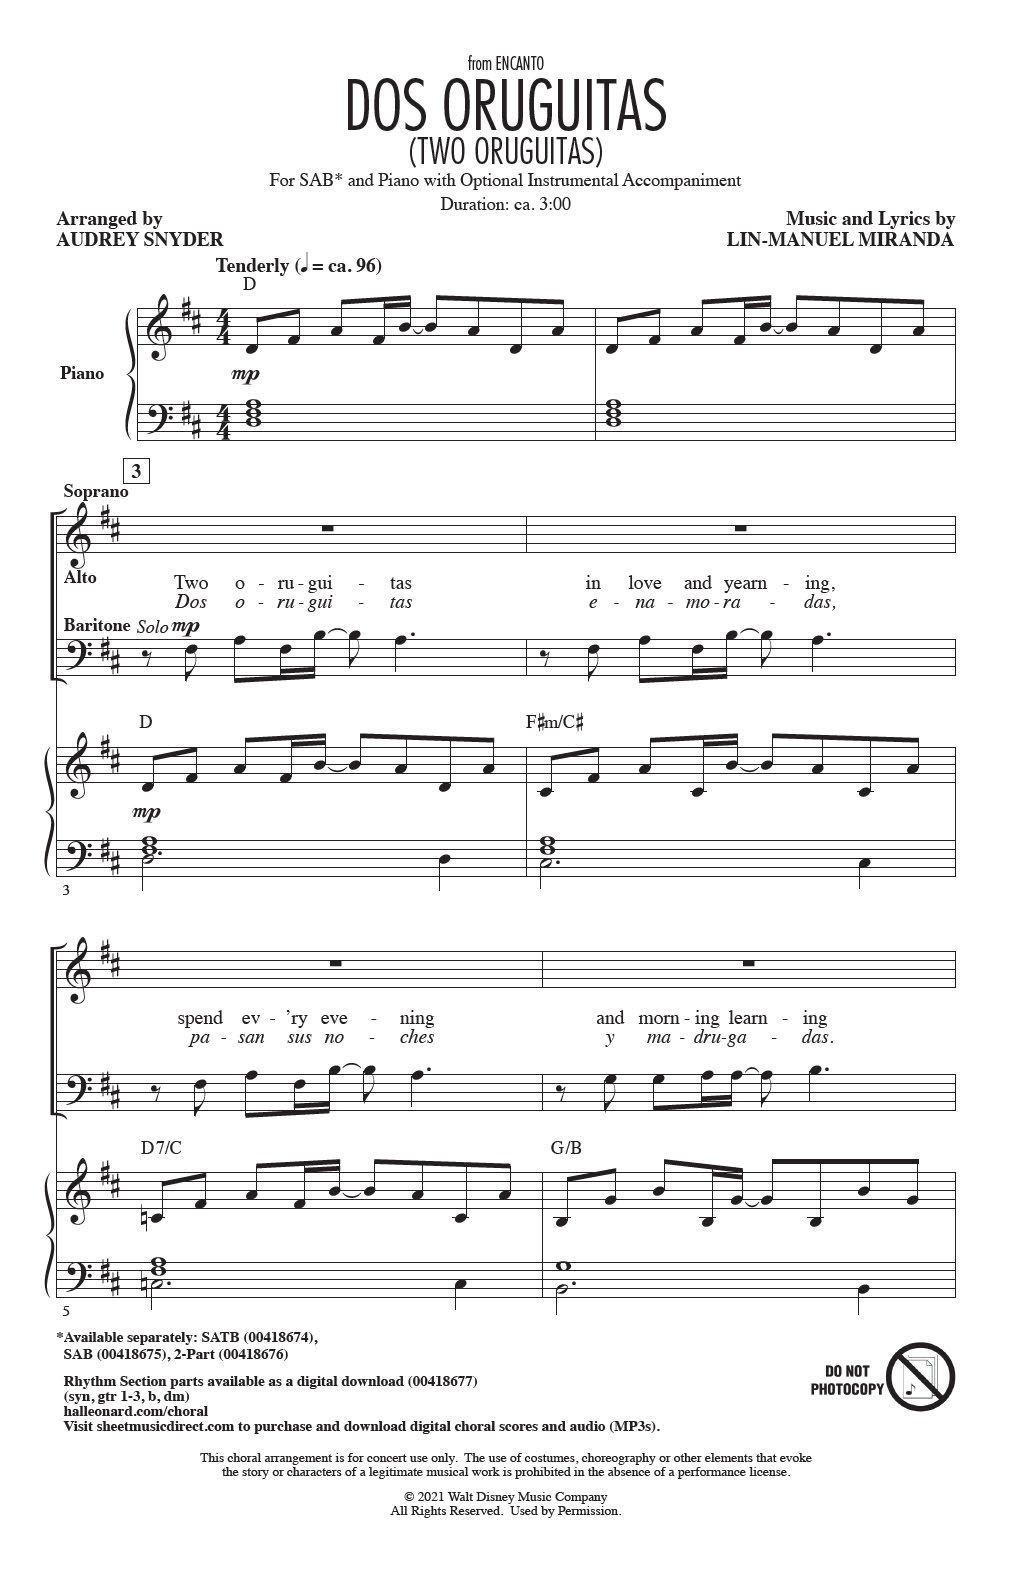 Lin-Manuel Miranda Dos Oruguitas (from Encanto) (arr. Audrey Snyder) Sheet Music Notes & Chords for SAB Choir - Download or Print PDF